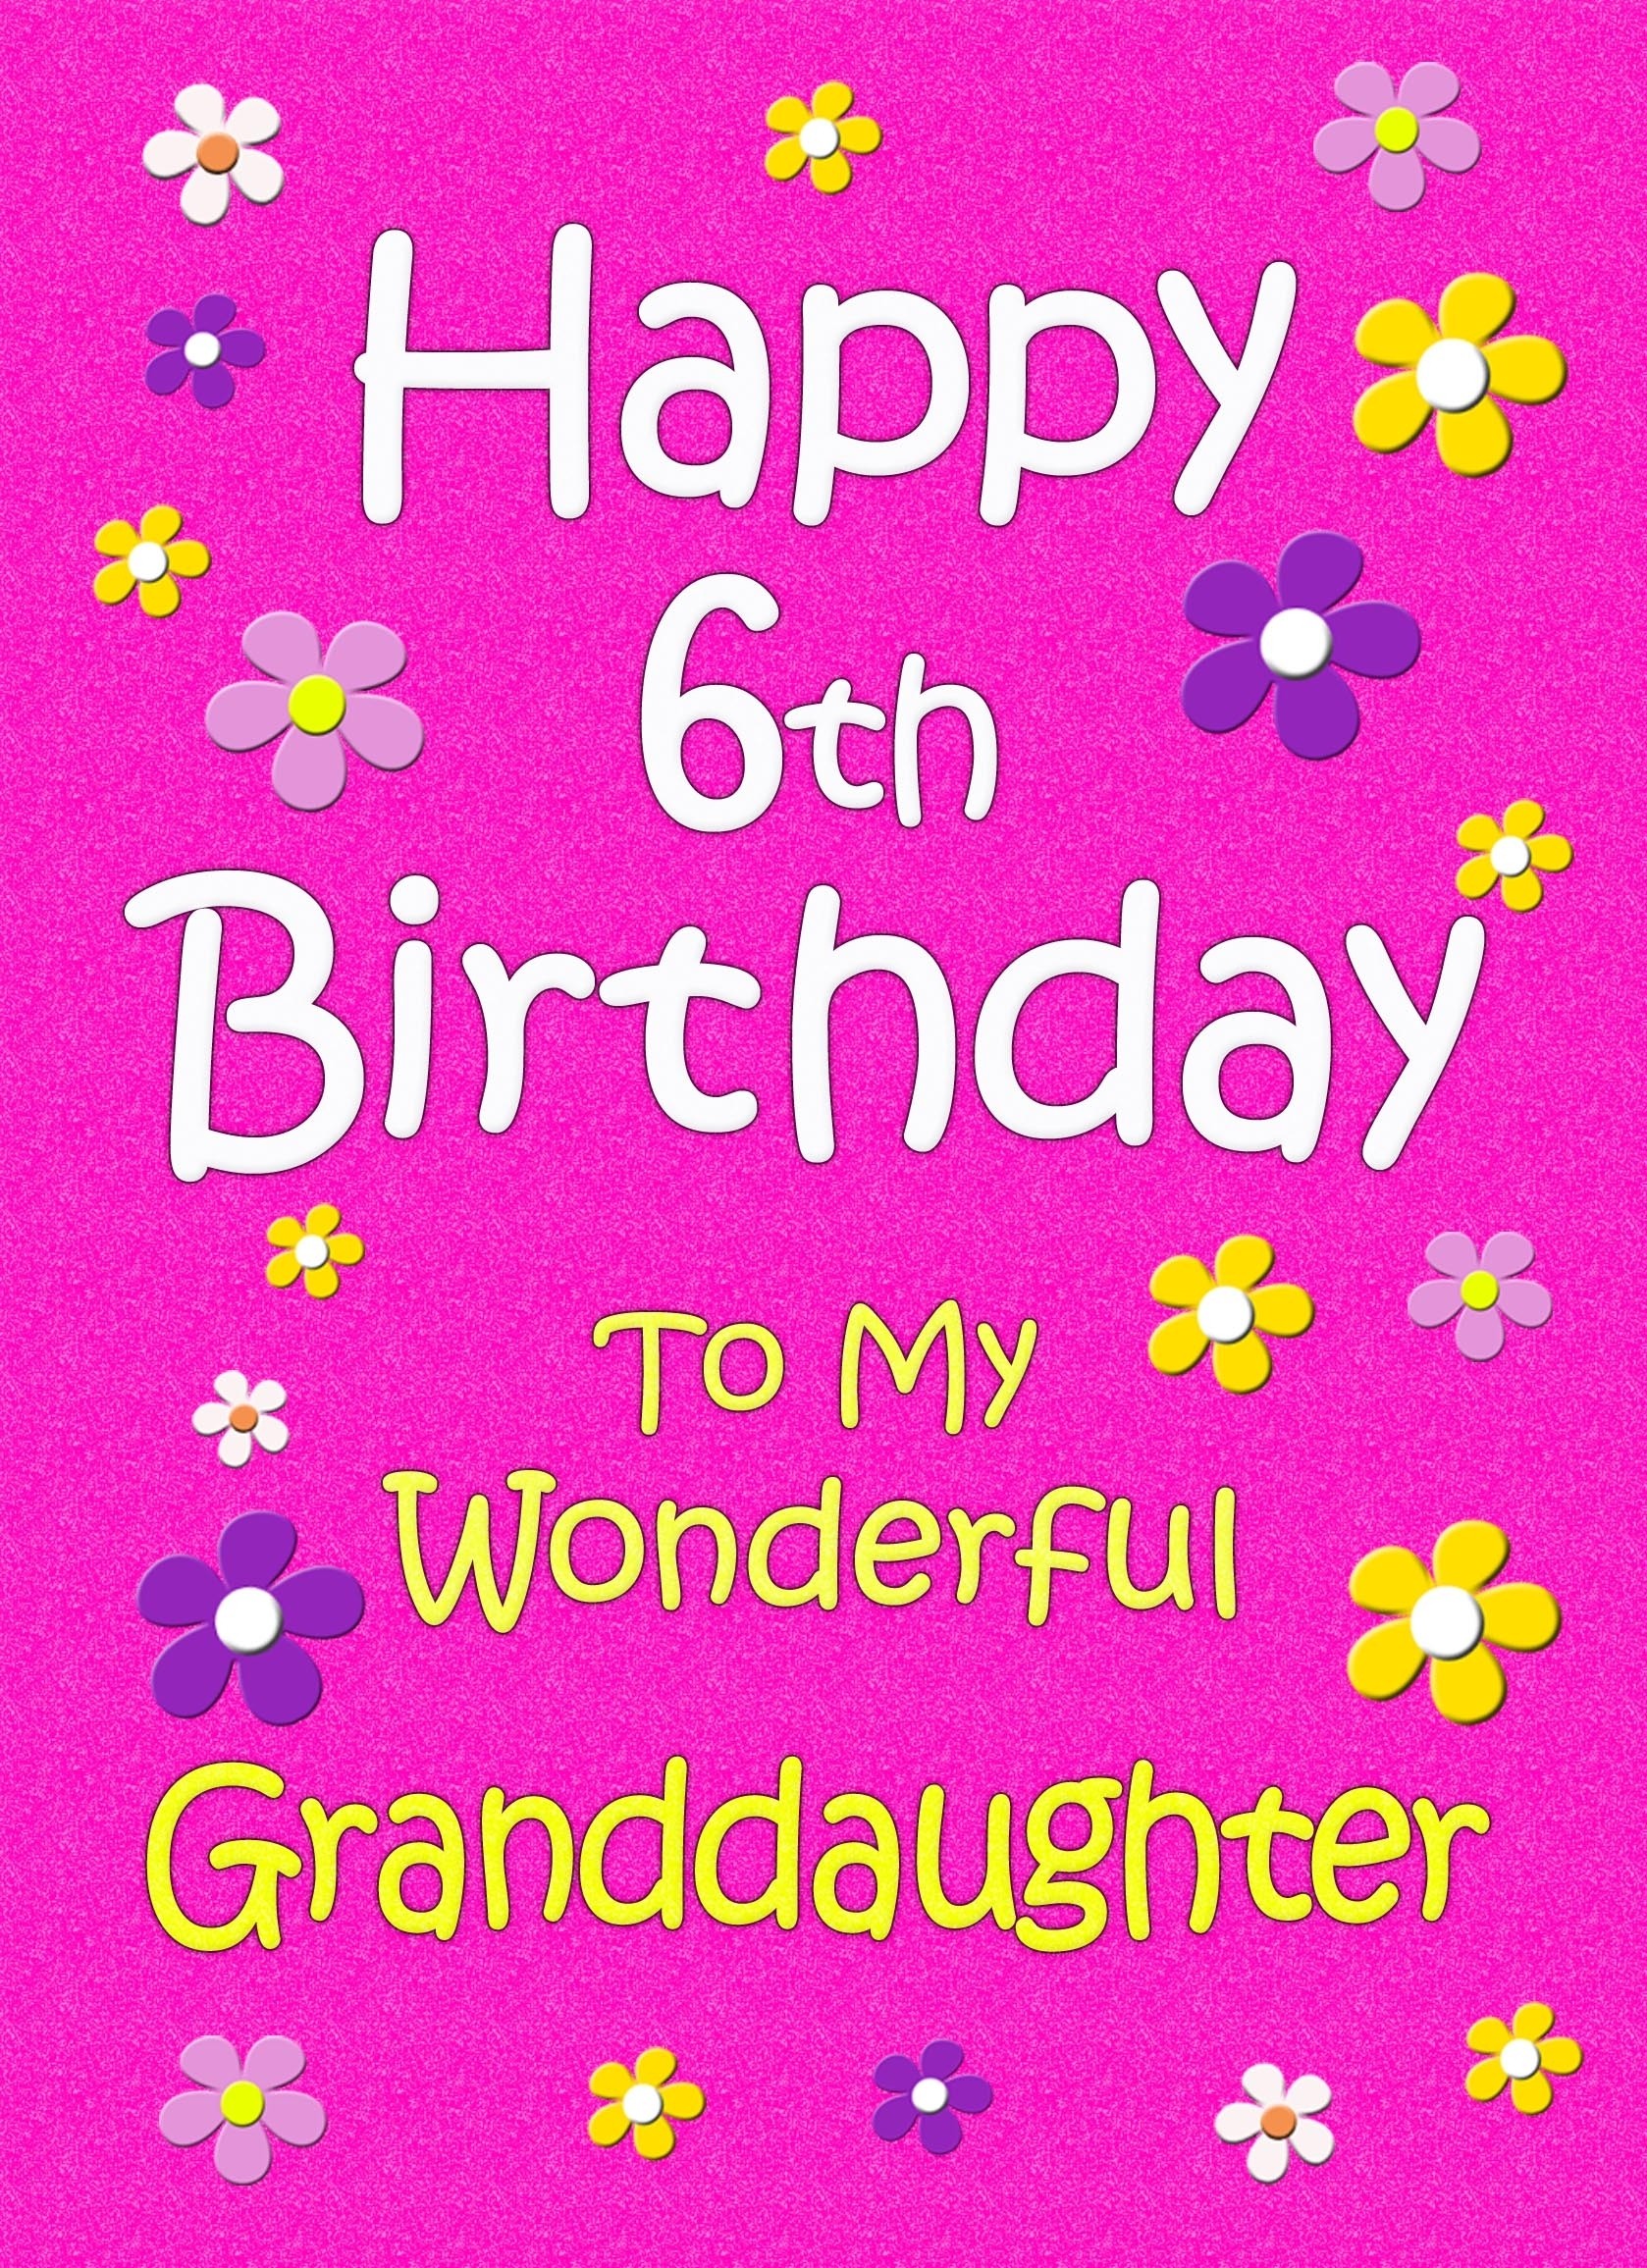 Granddaughter 6th Birthday Card (Pink)